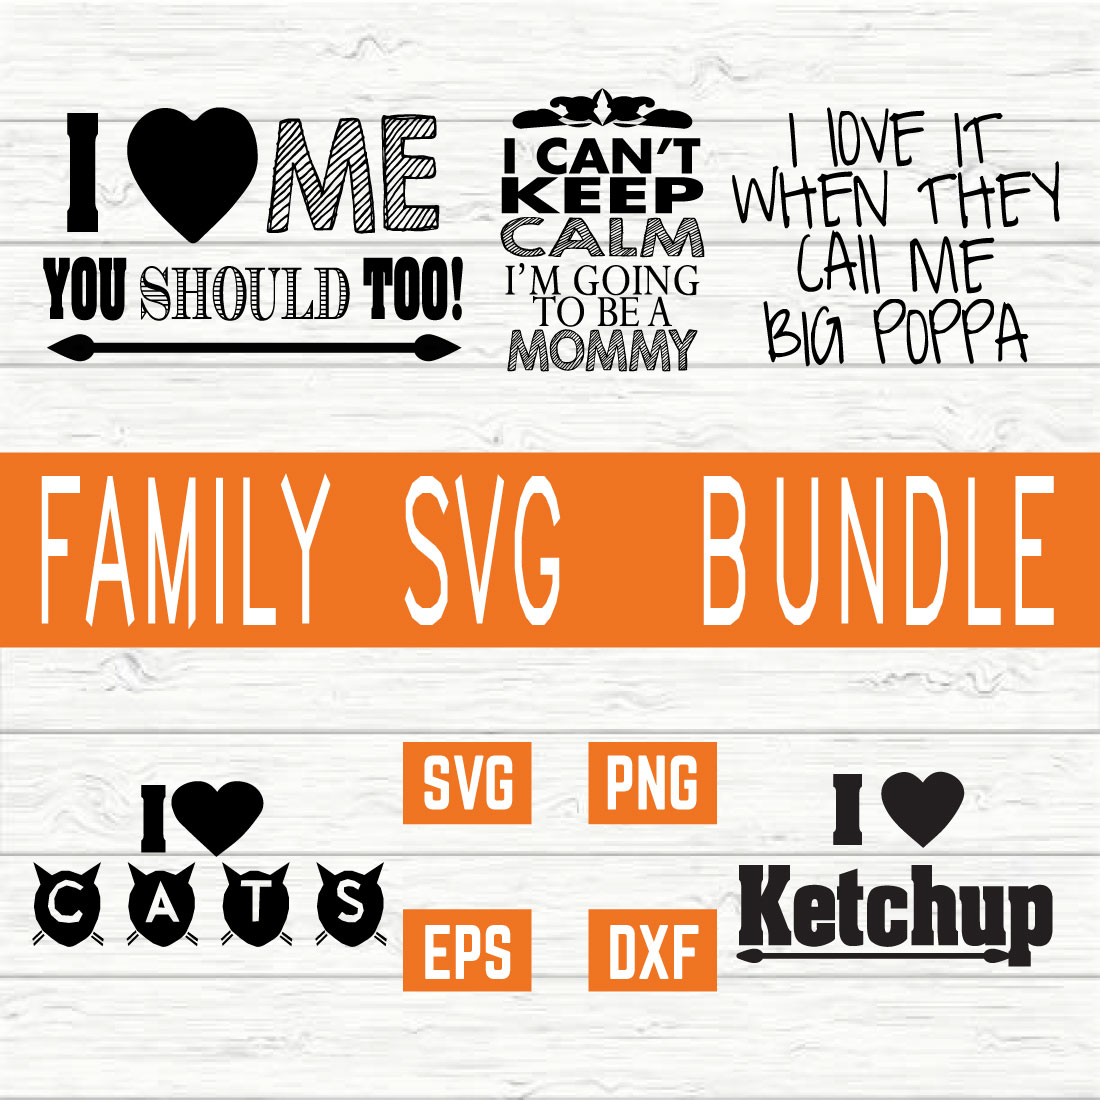 Family Svg Bundle vol 14 cover image.